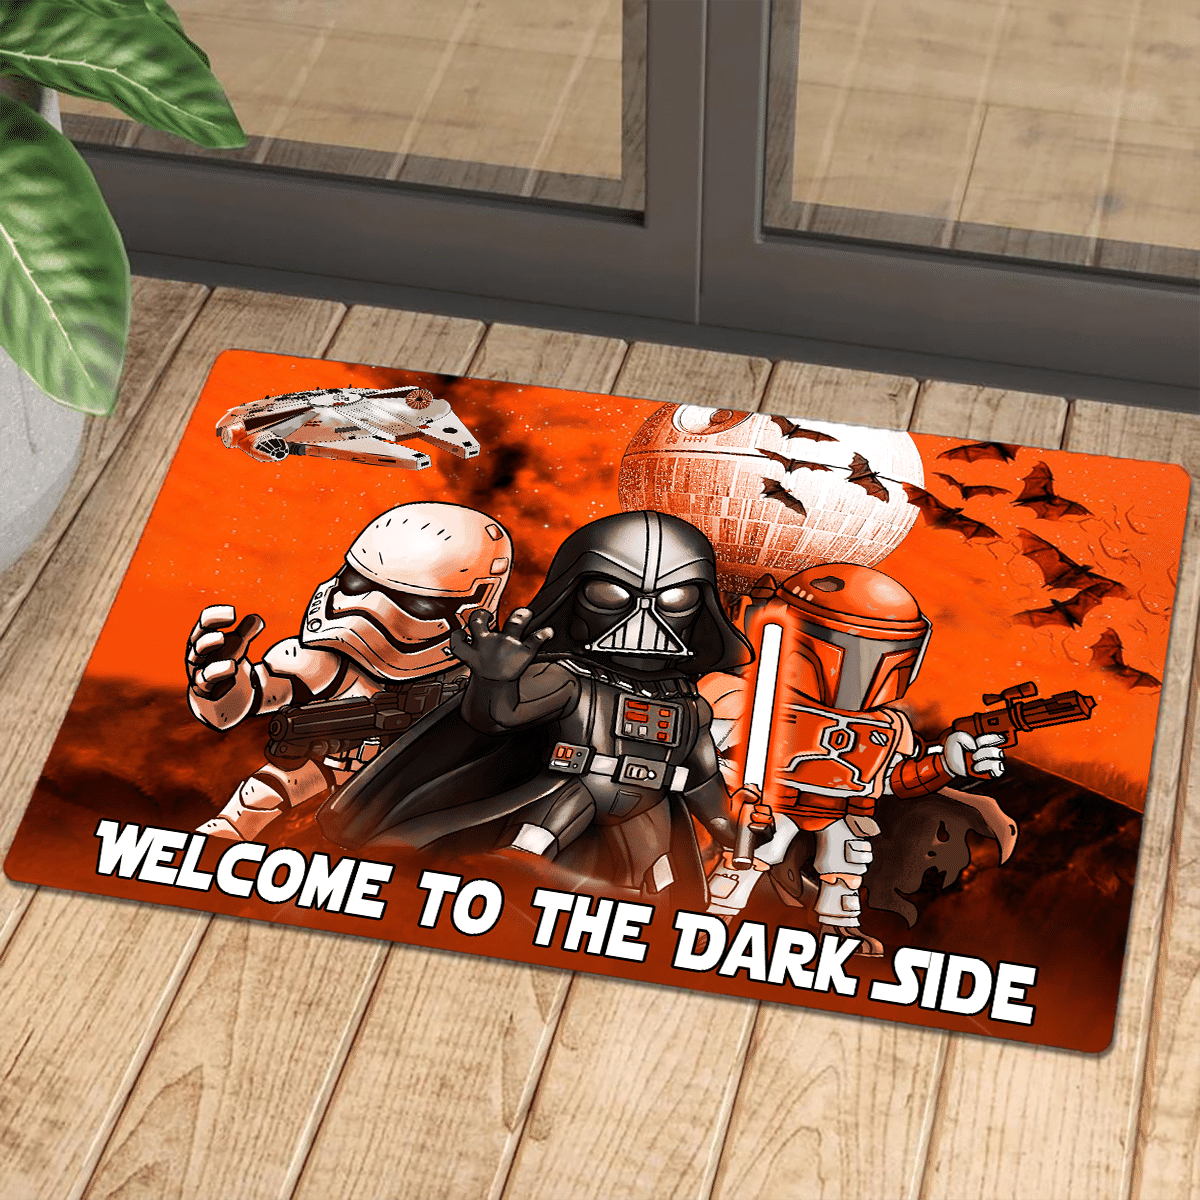 Star Wars Darth Vader Stormtrooper Boba Fett Welcome to the dark side doormat 10